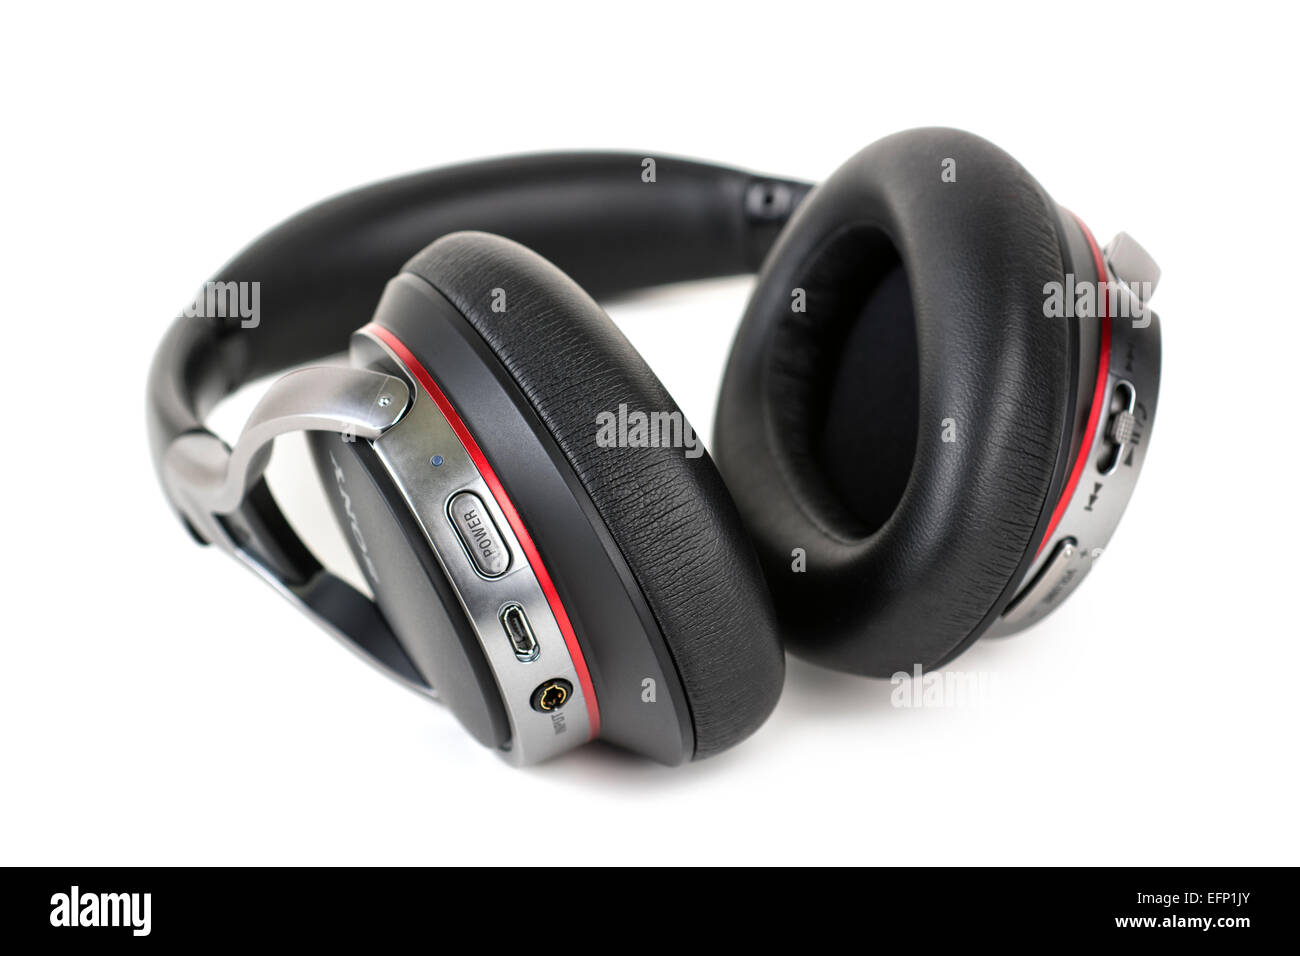 Auriculares inalámbricos Bluetooth, auriculares con micrófono para contestar llamadas telefónicas Foto de stock